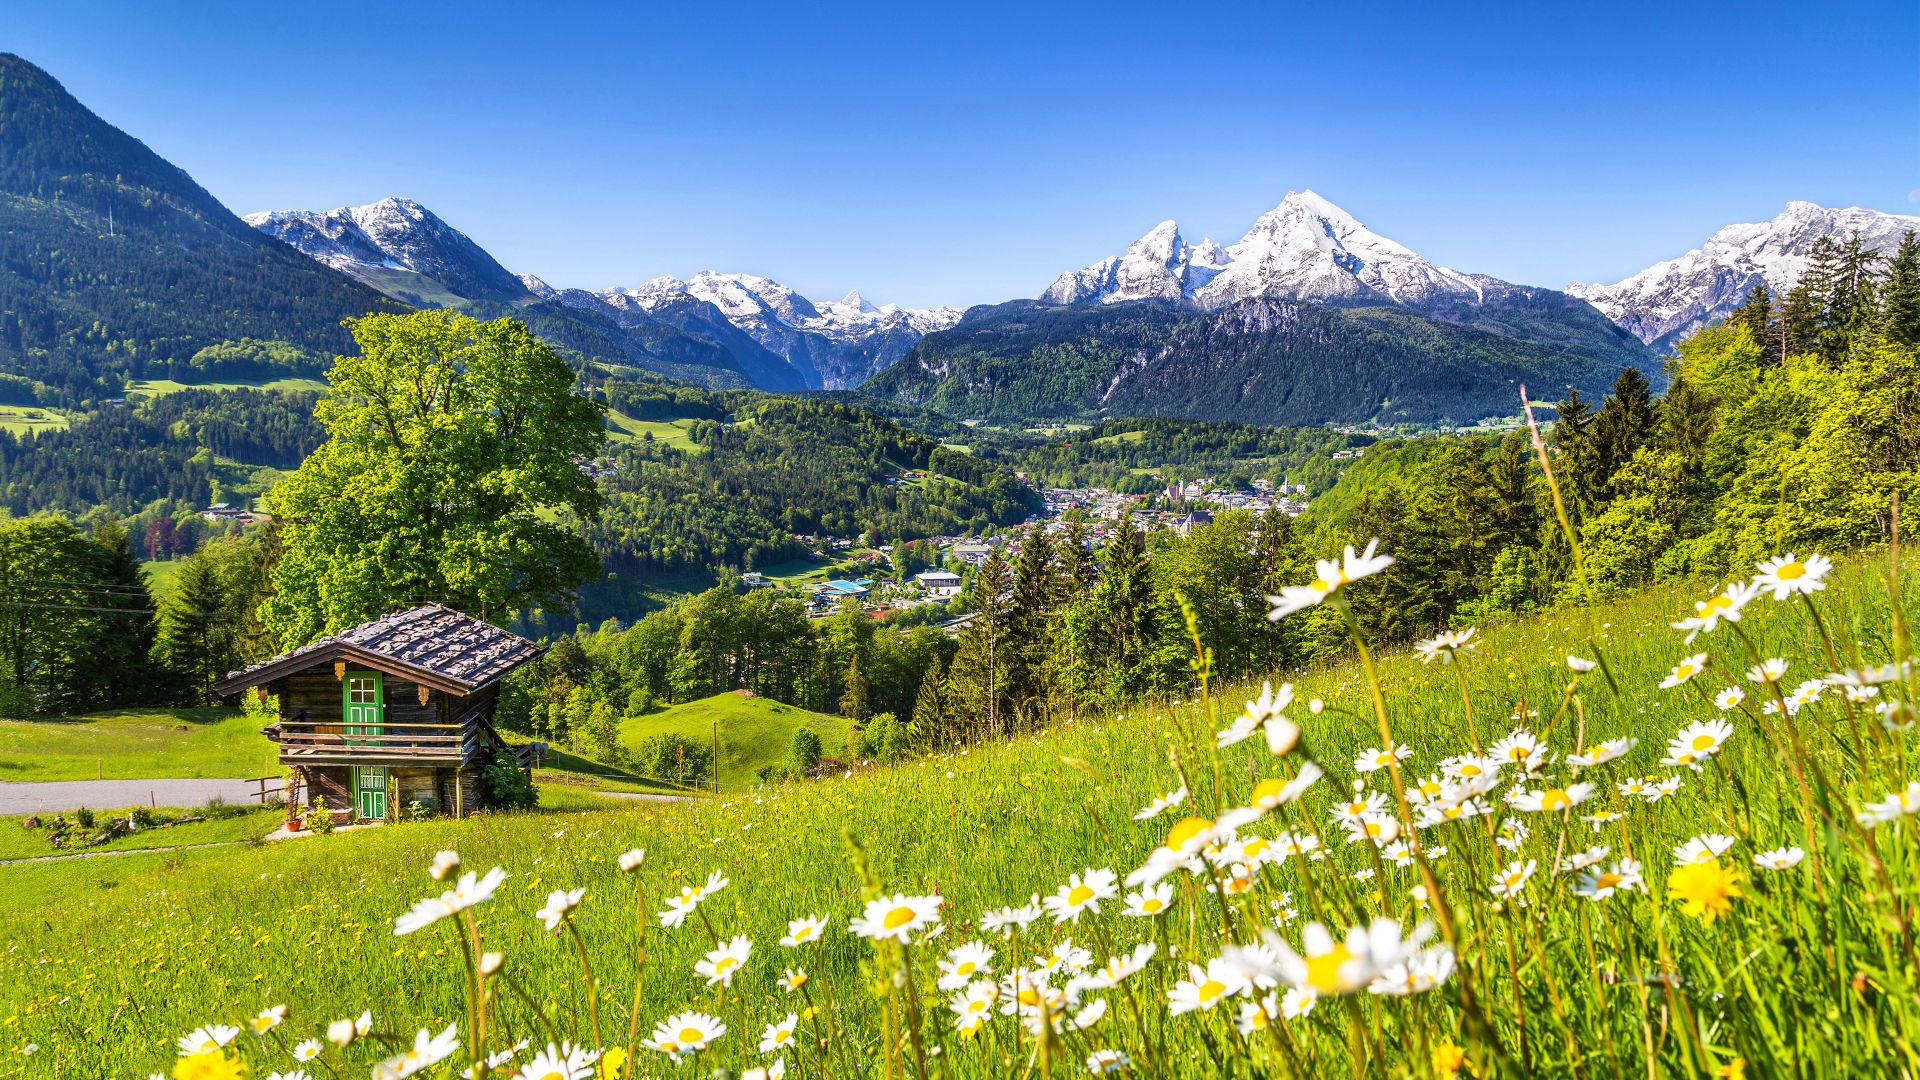 Alps, 5k, 4k wallpaper, Germany, Meadows, mountains, grass, daisies (horizontal)